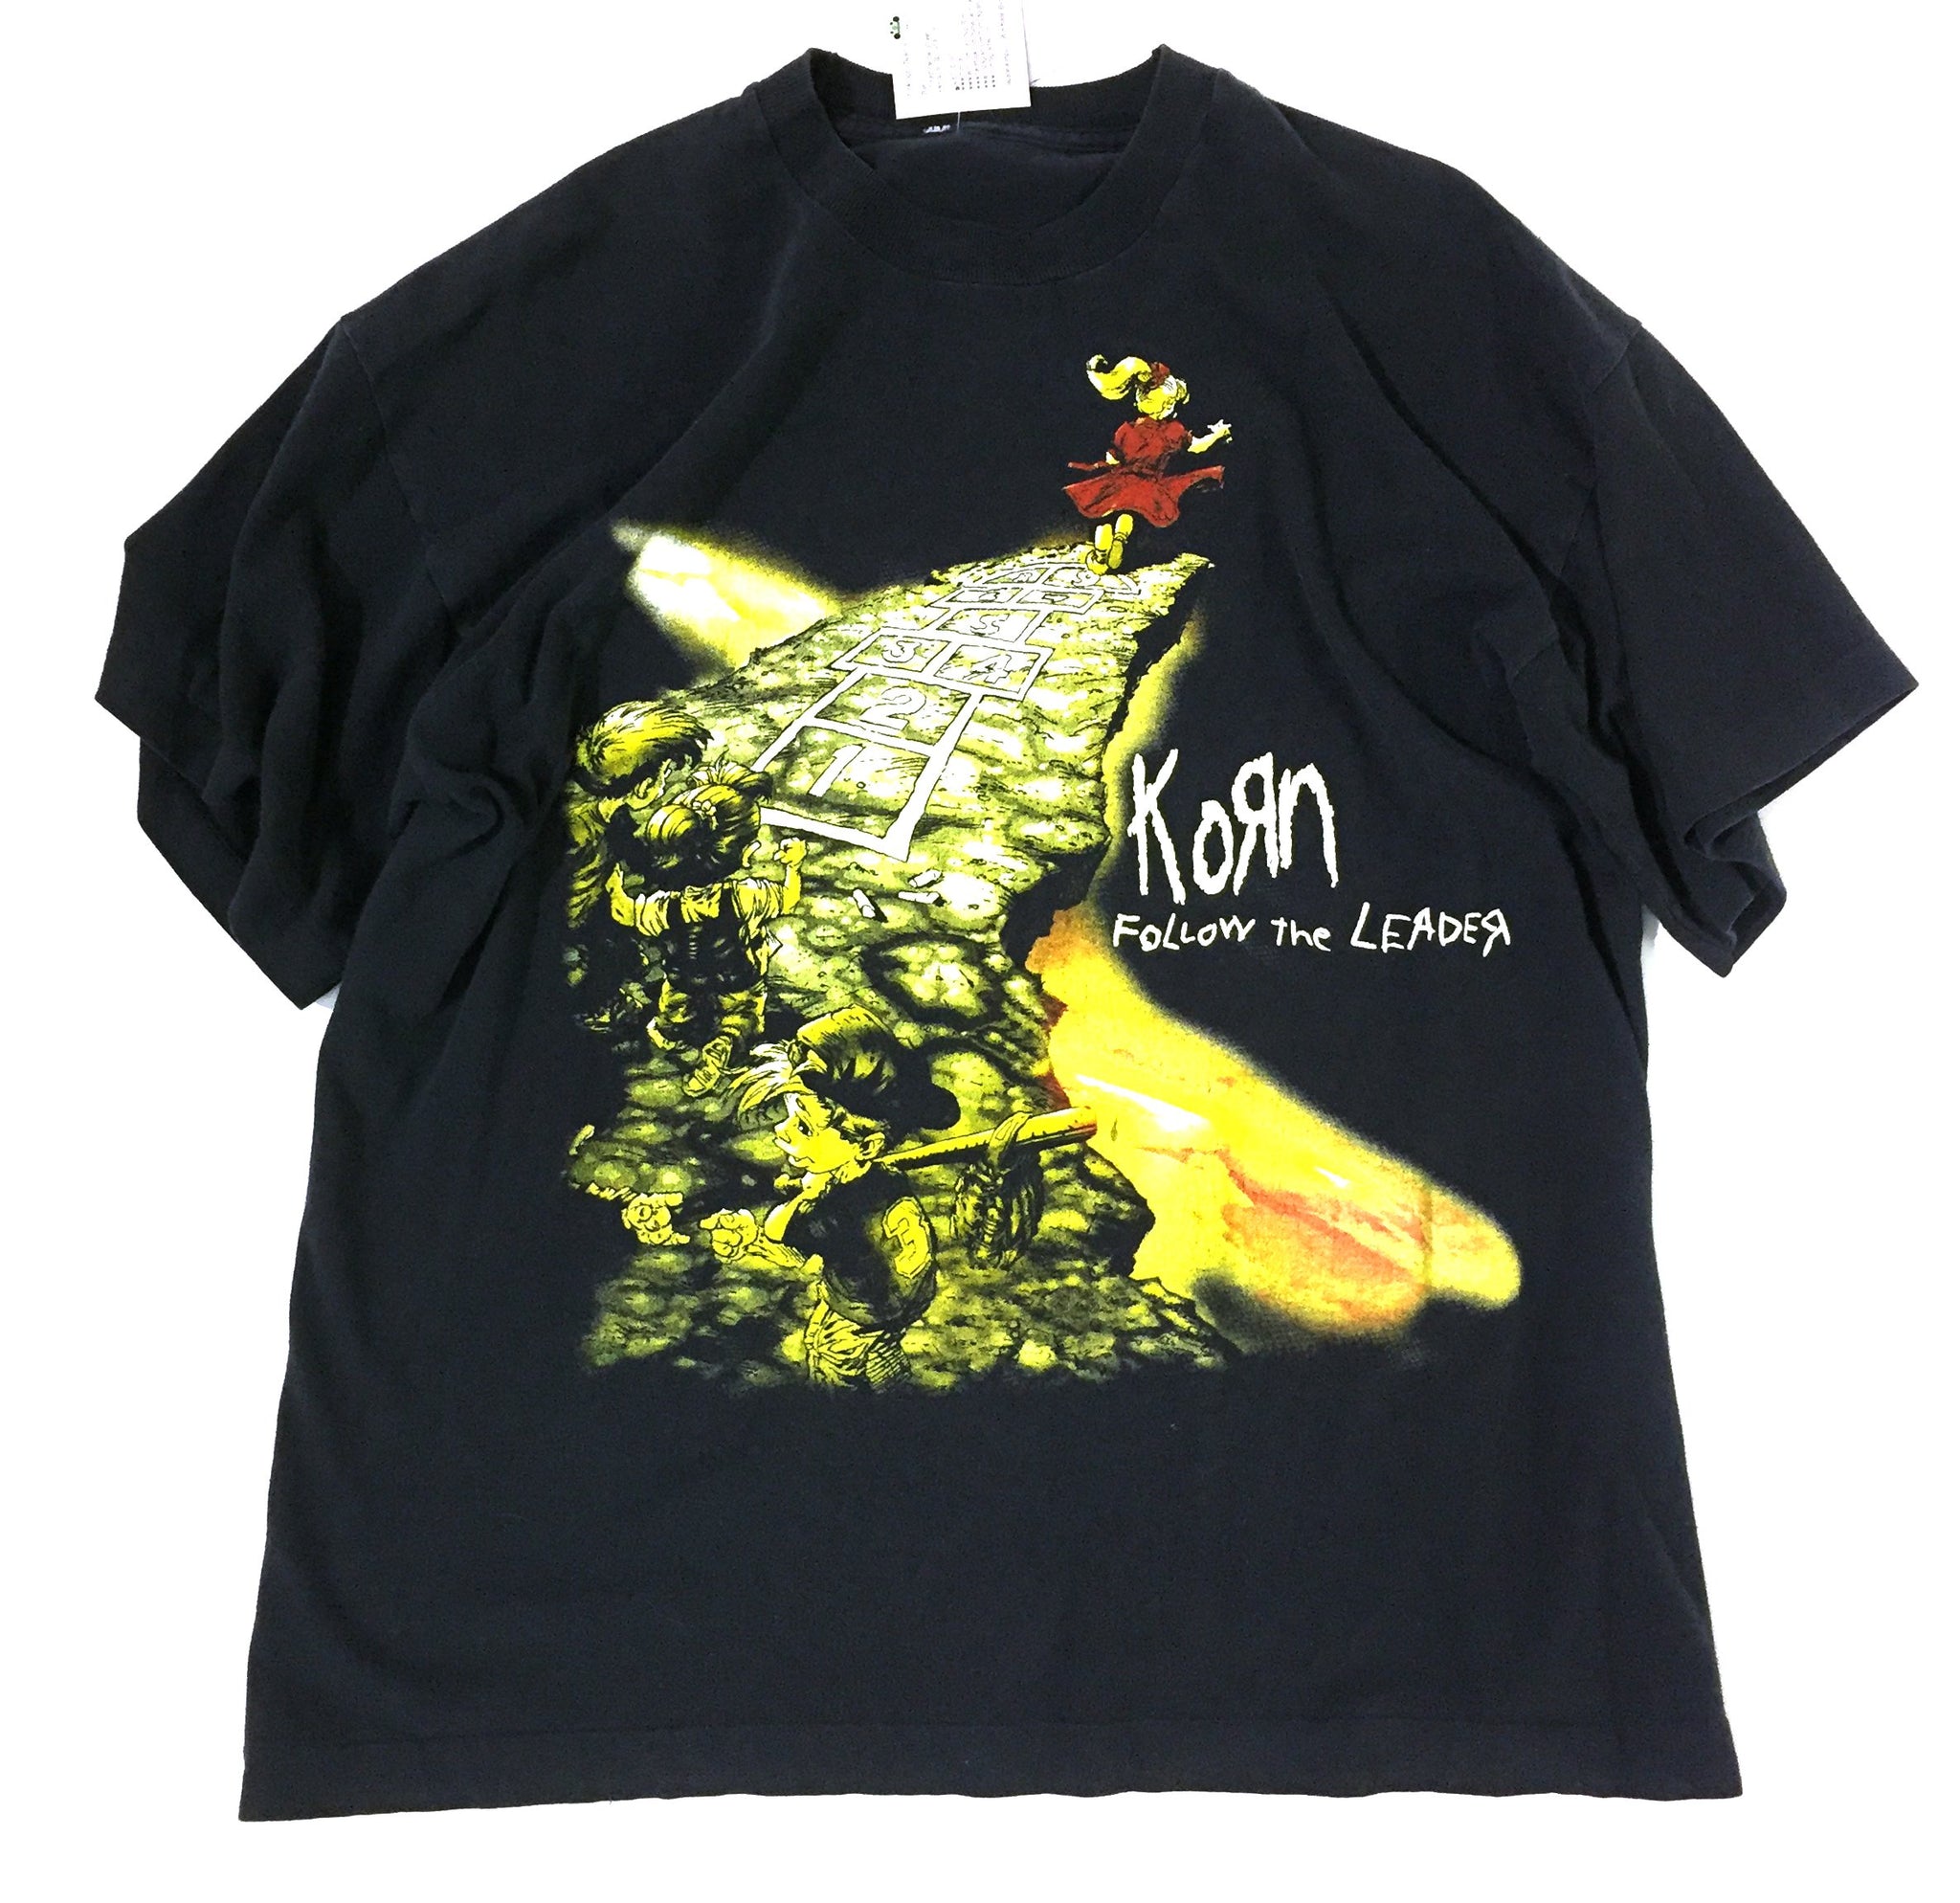 Vintage Korn Follow the Leader T-shirt